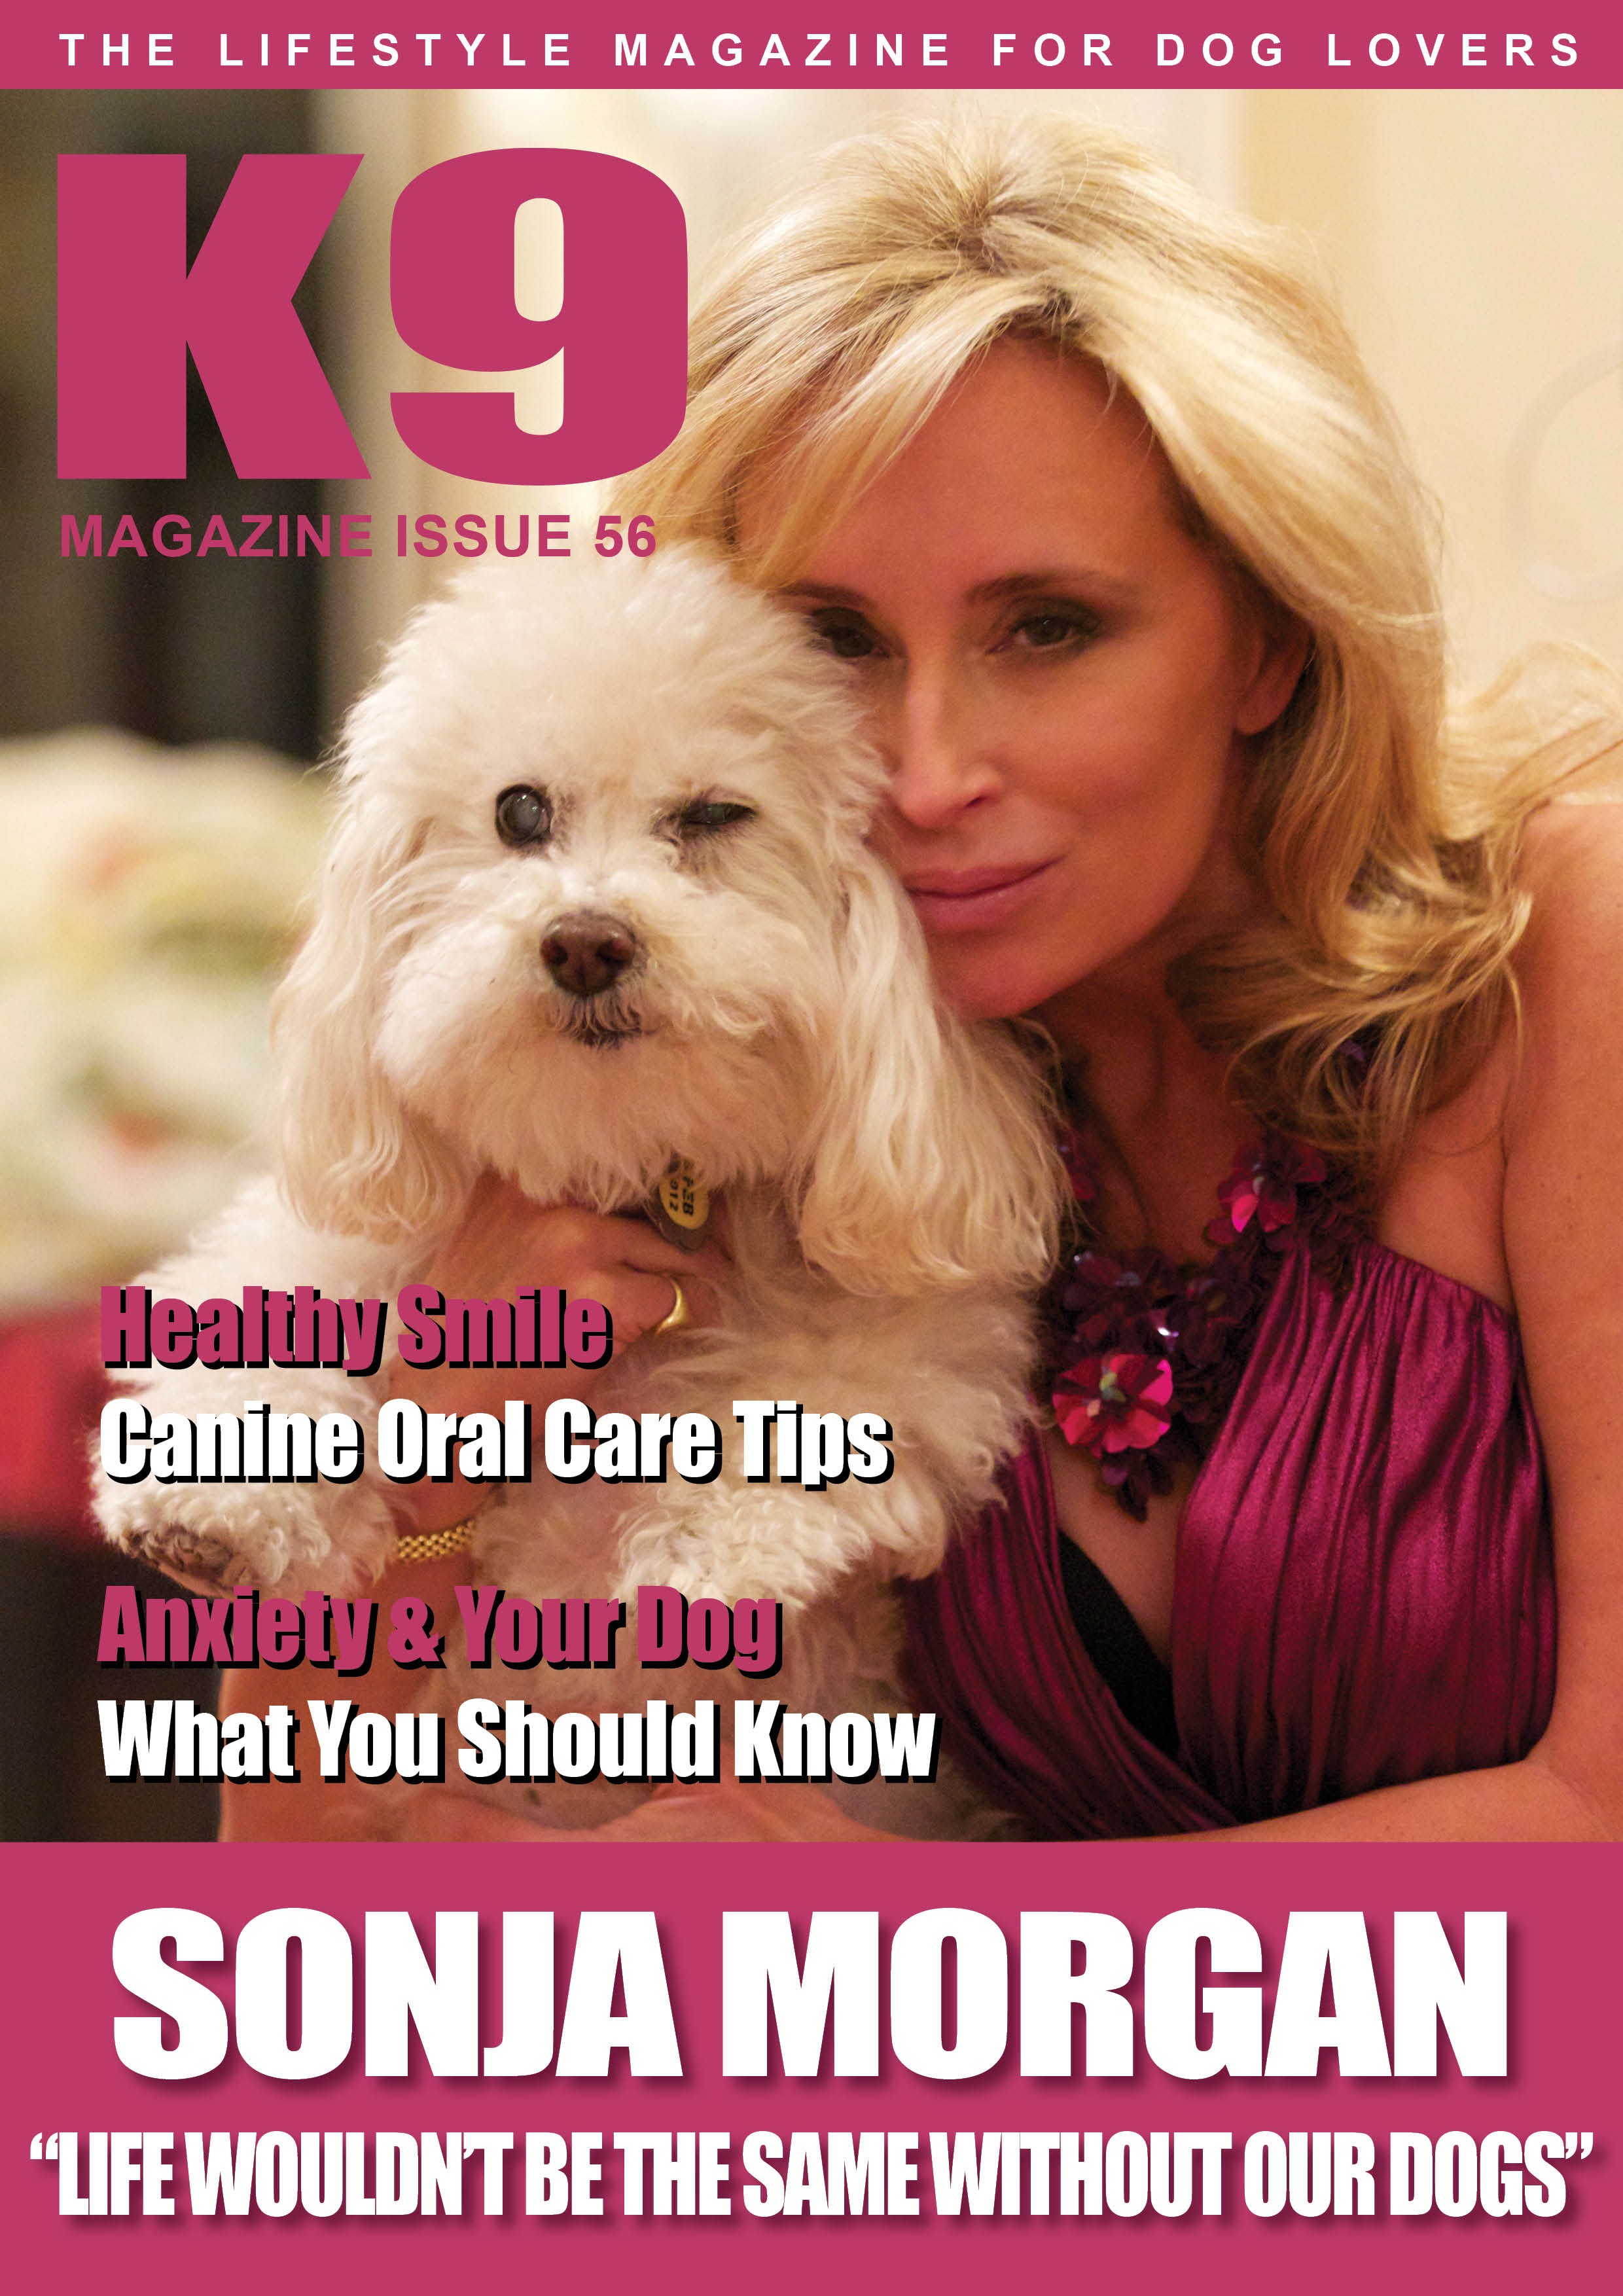 Sonja Morgan on the cover of K9 Magazine.